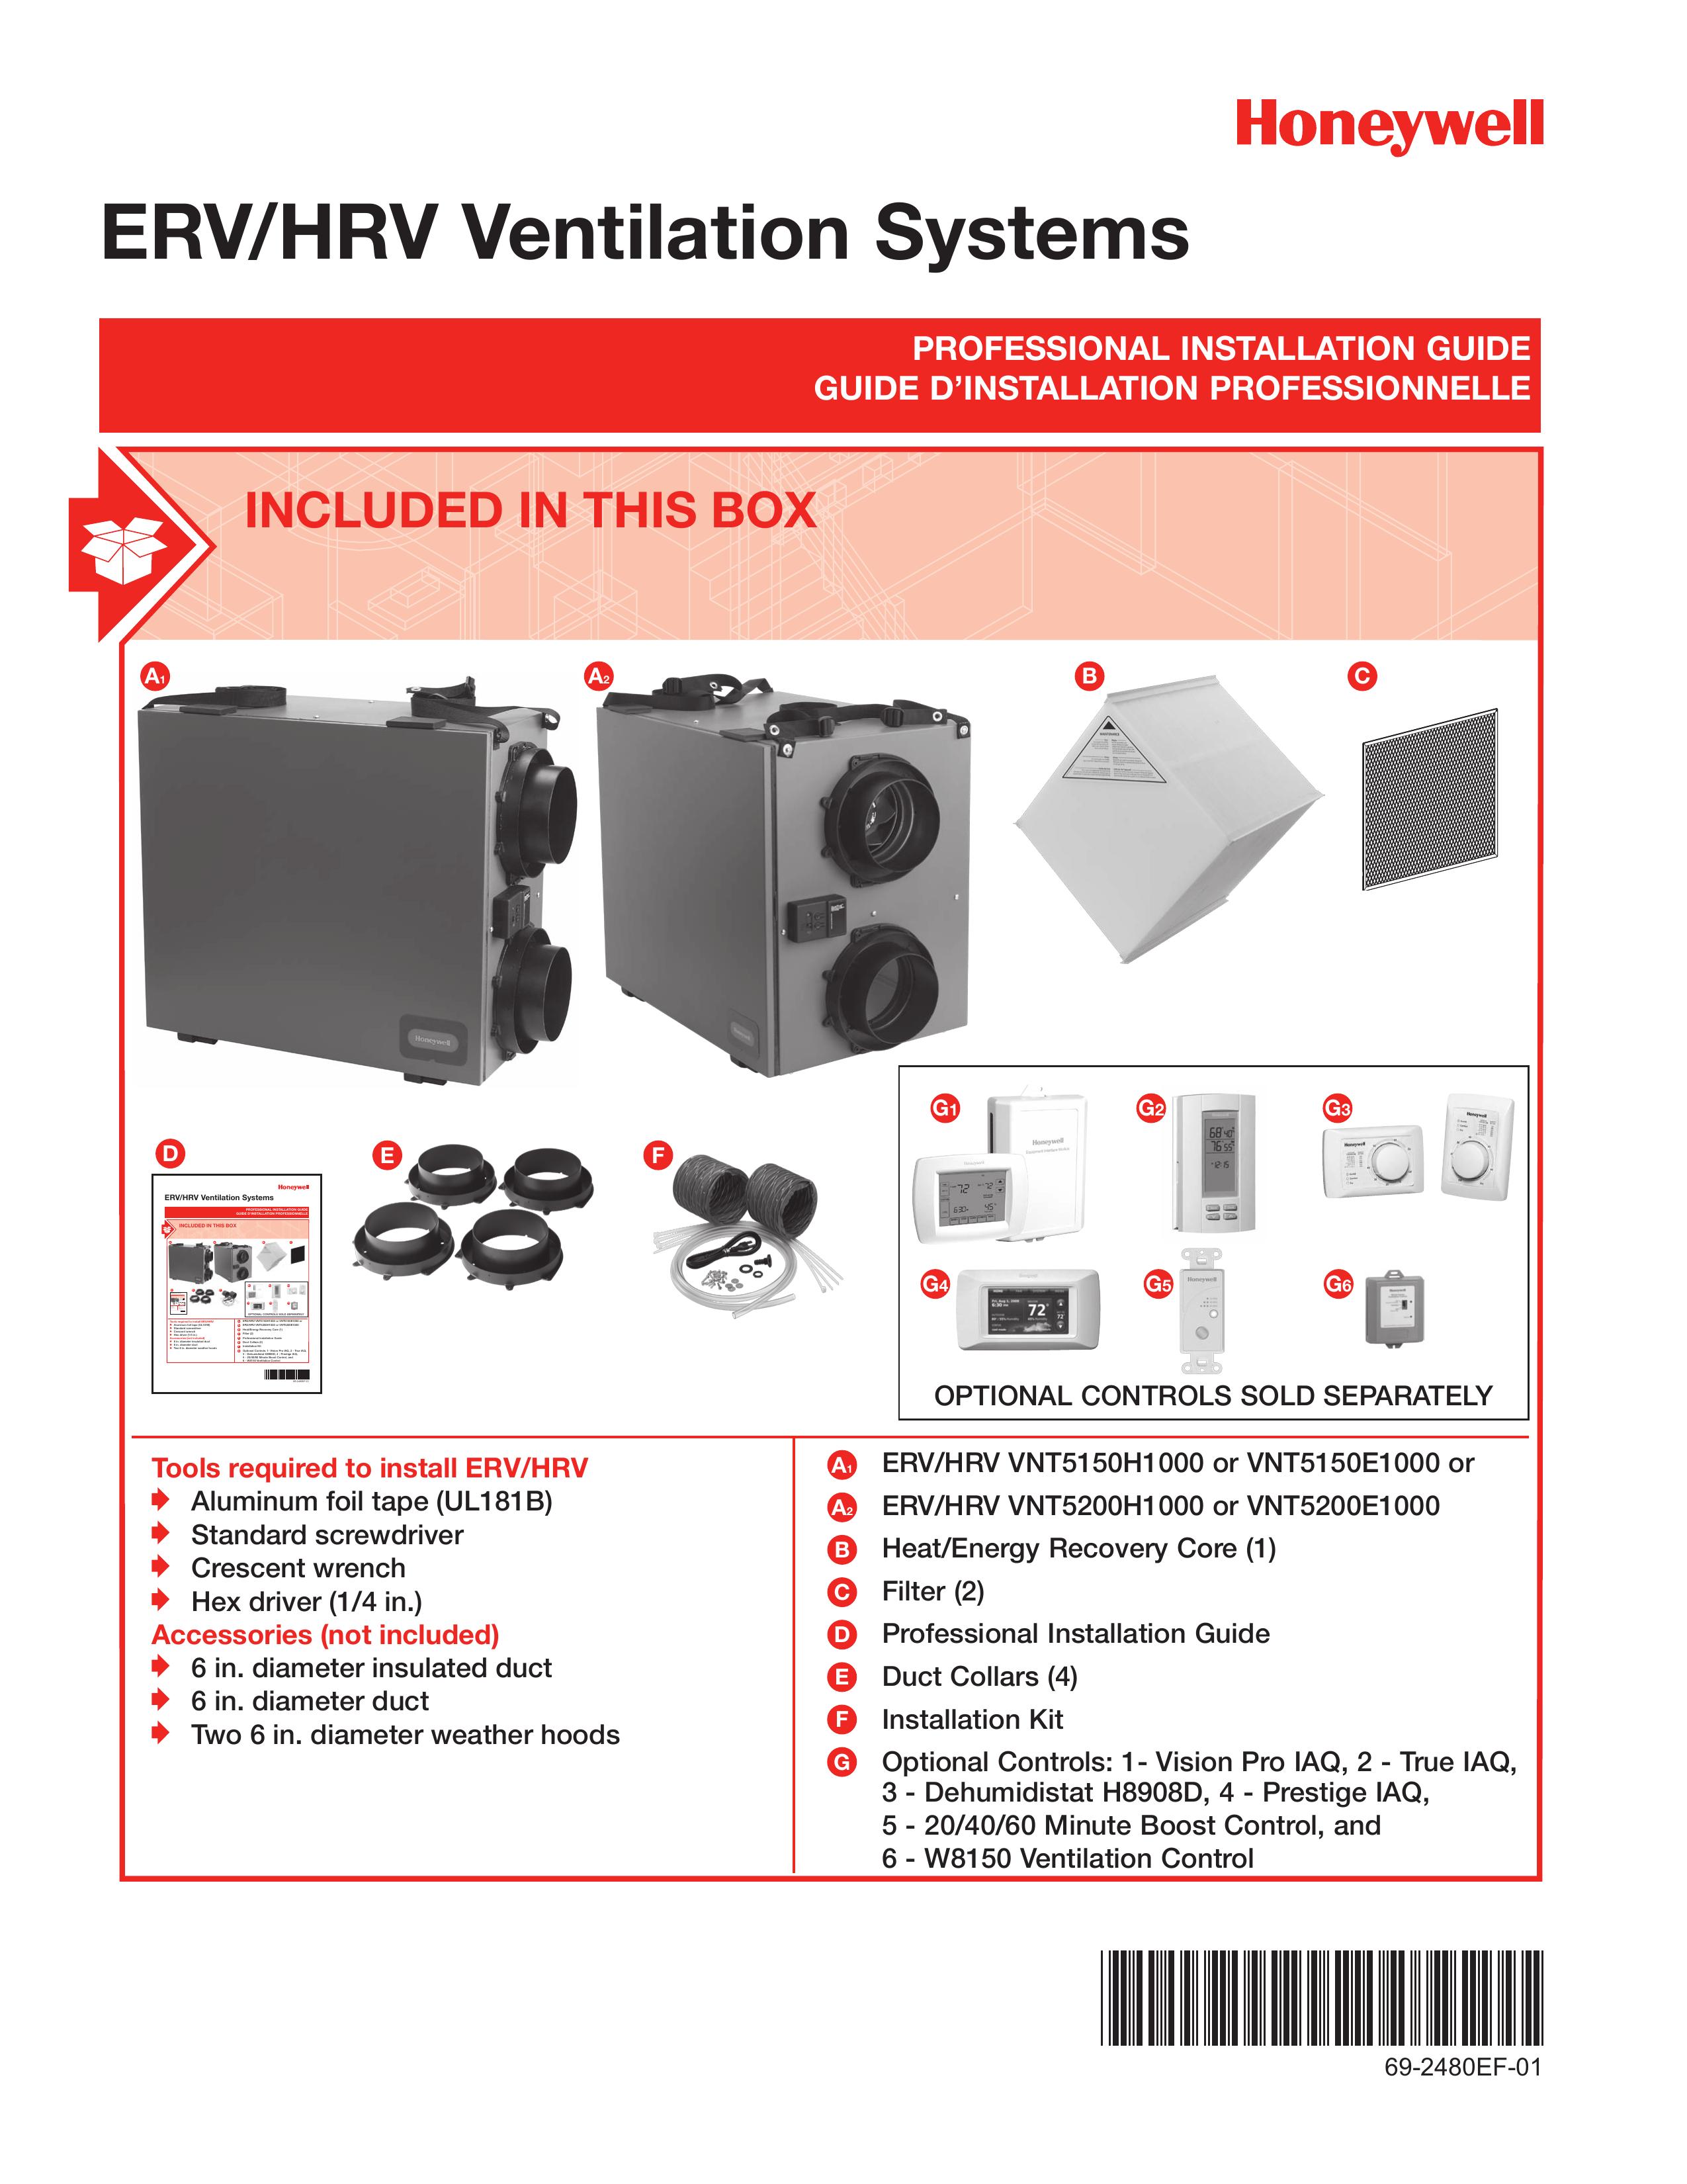 Honeywell VNT5200E1000 Ventilation Hood User Manual